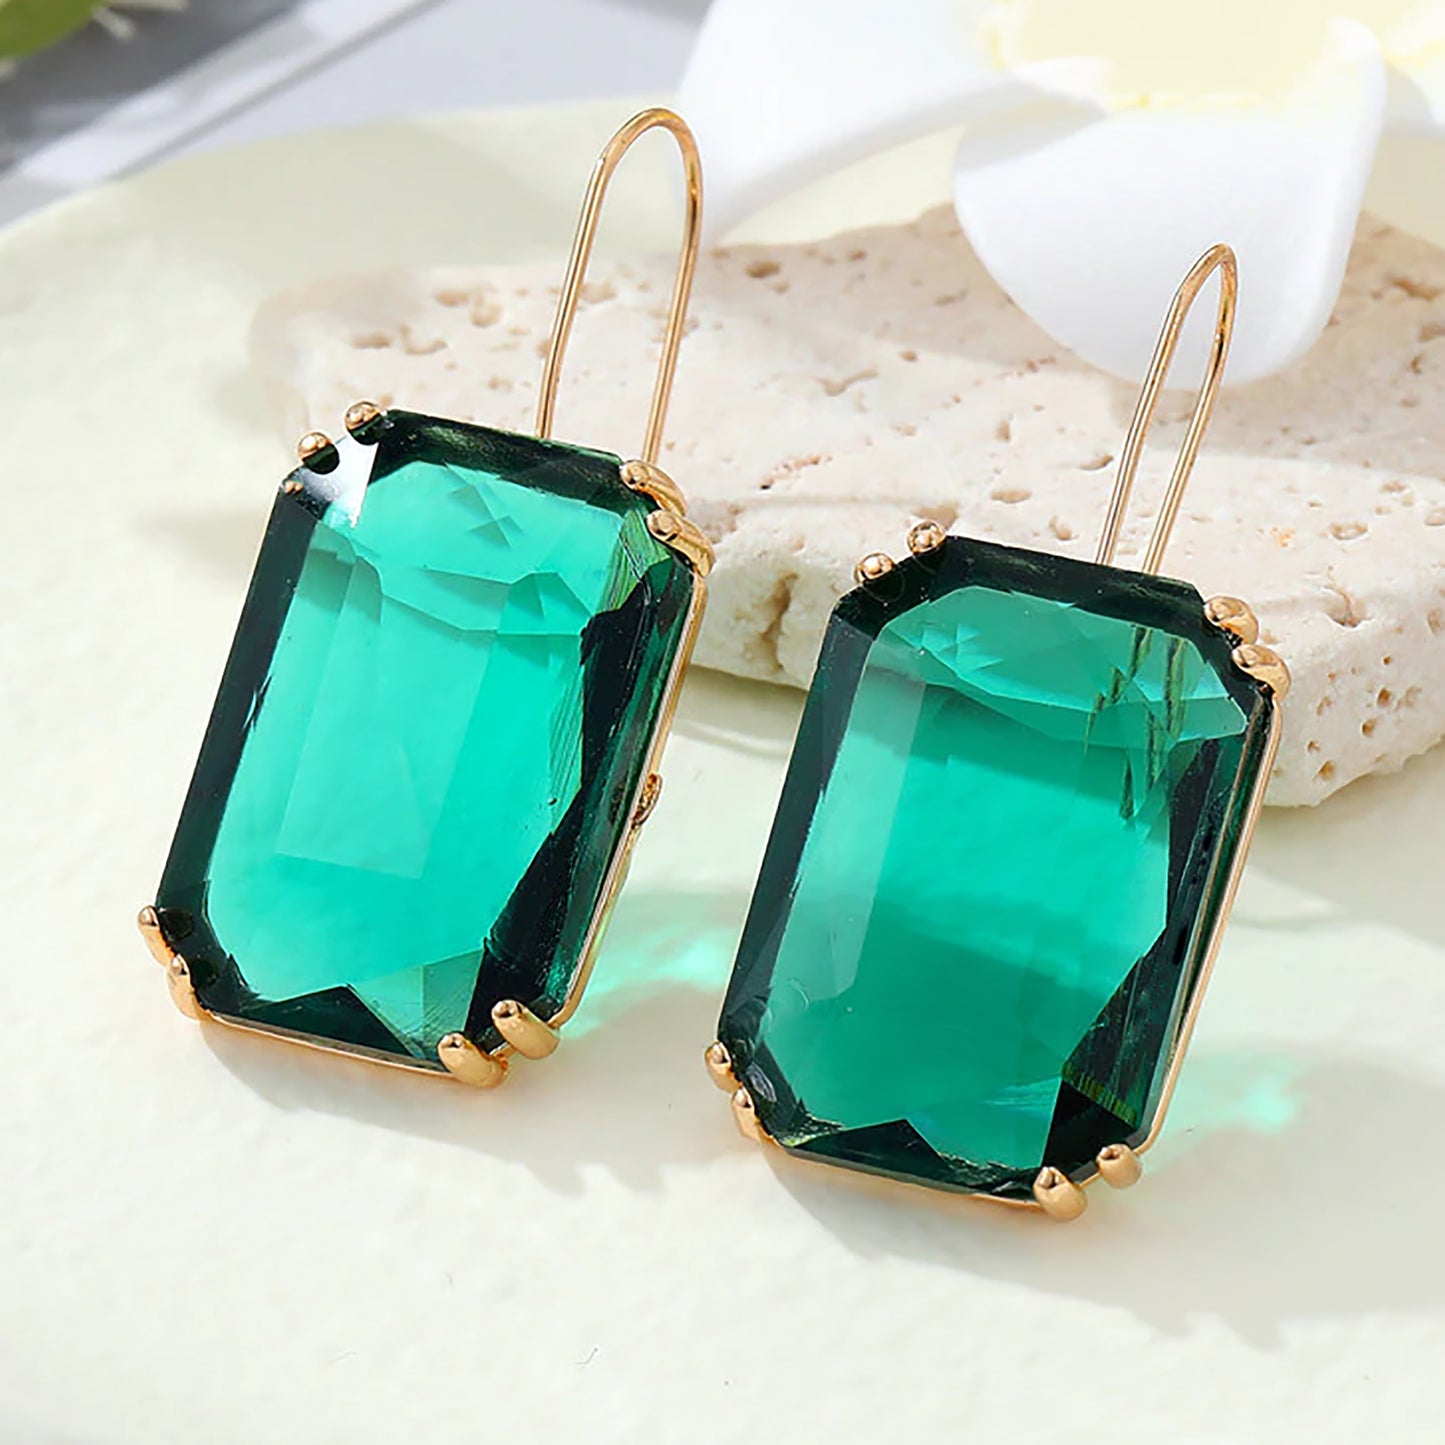 Emerald Green crystal earrings